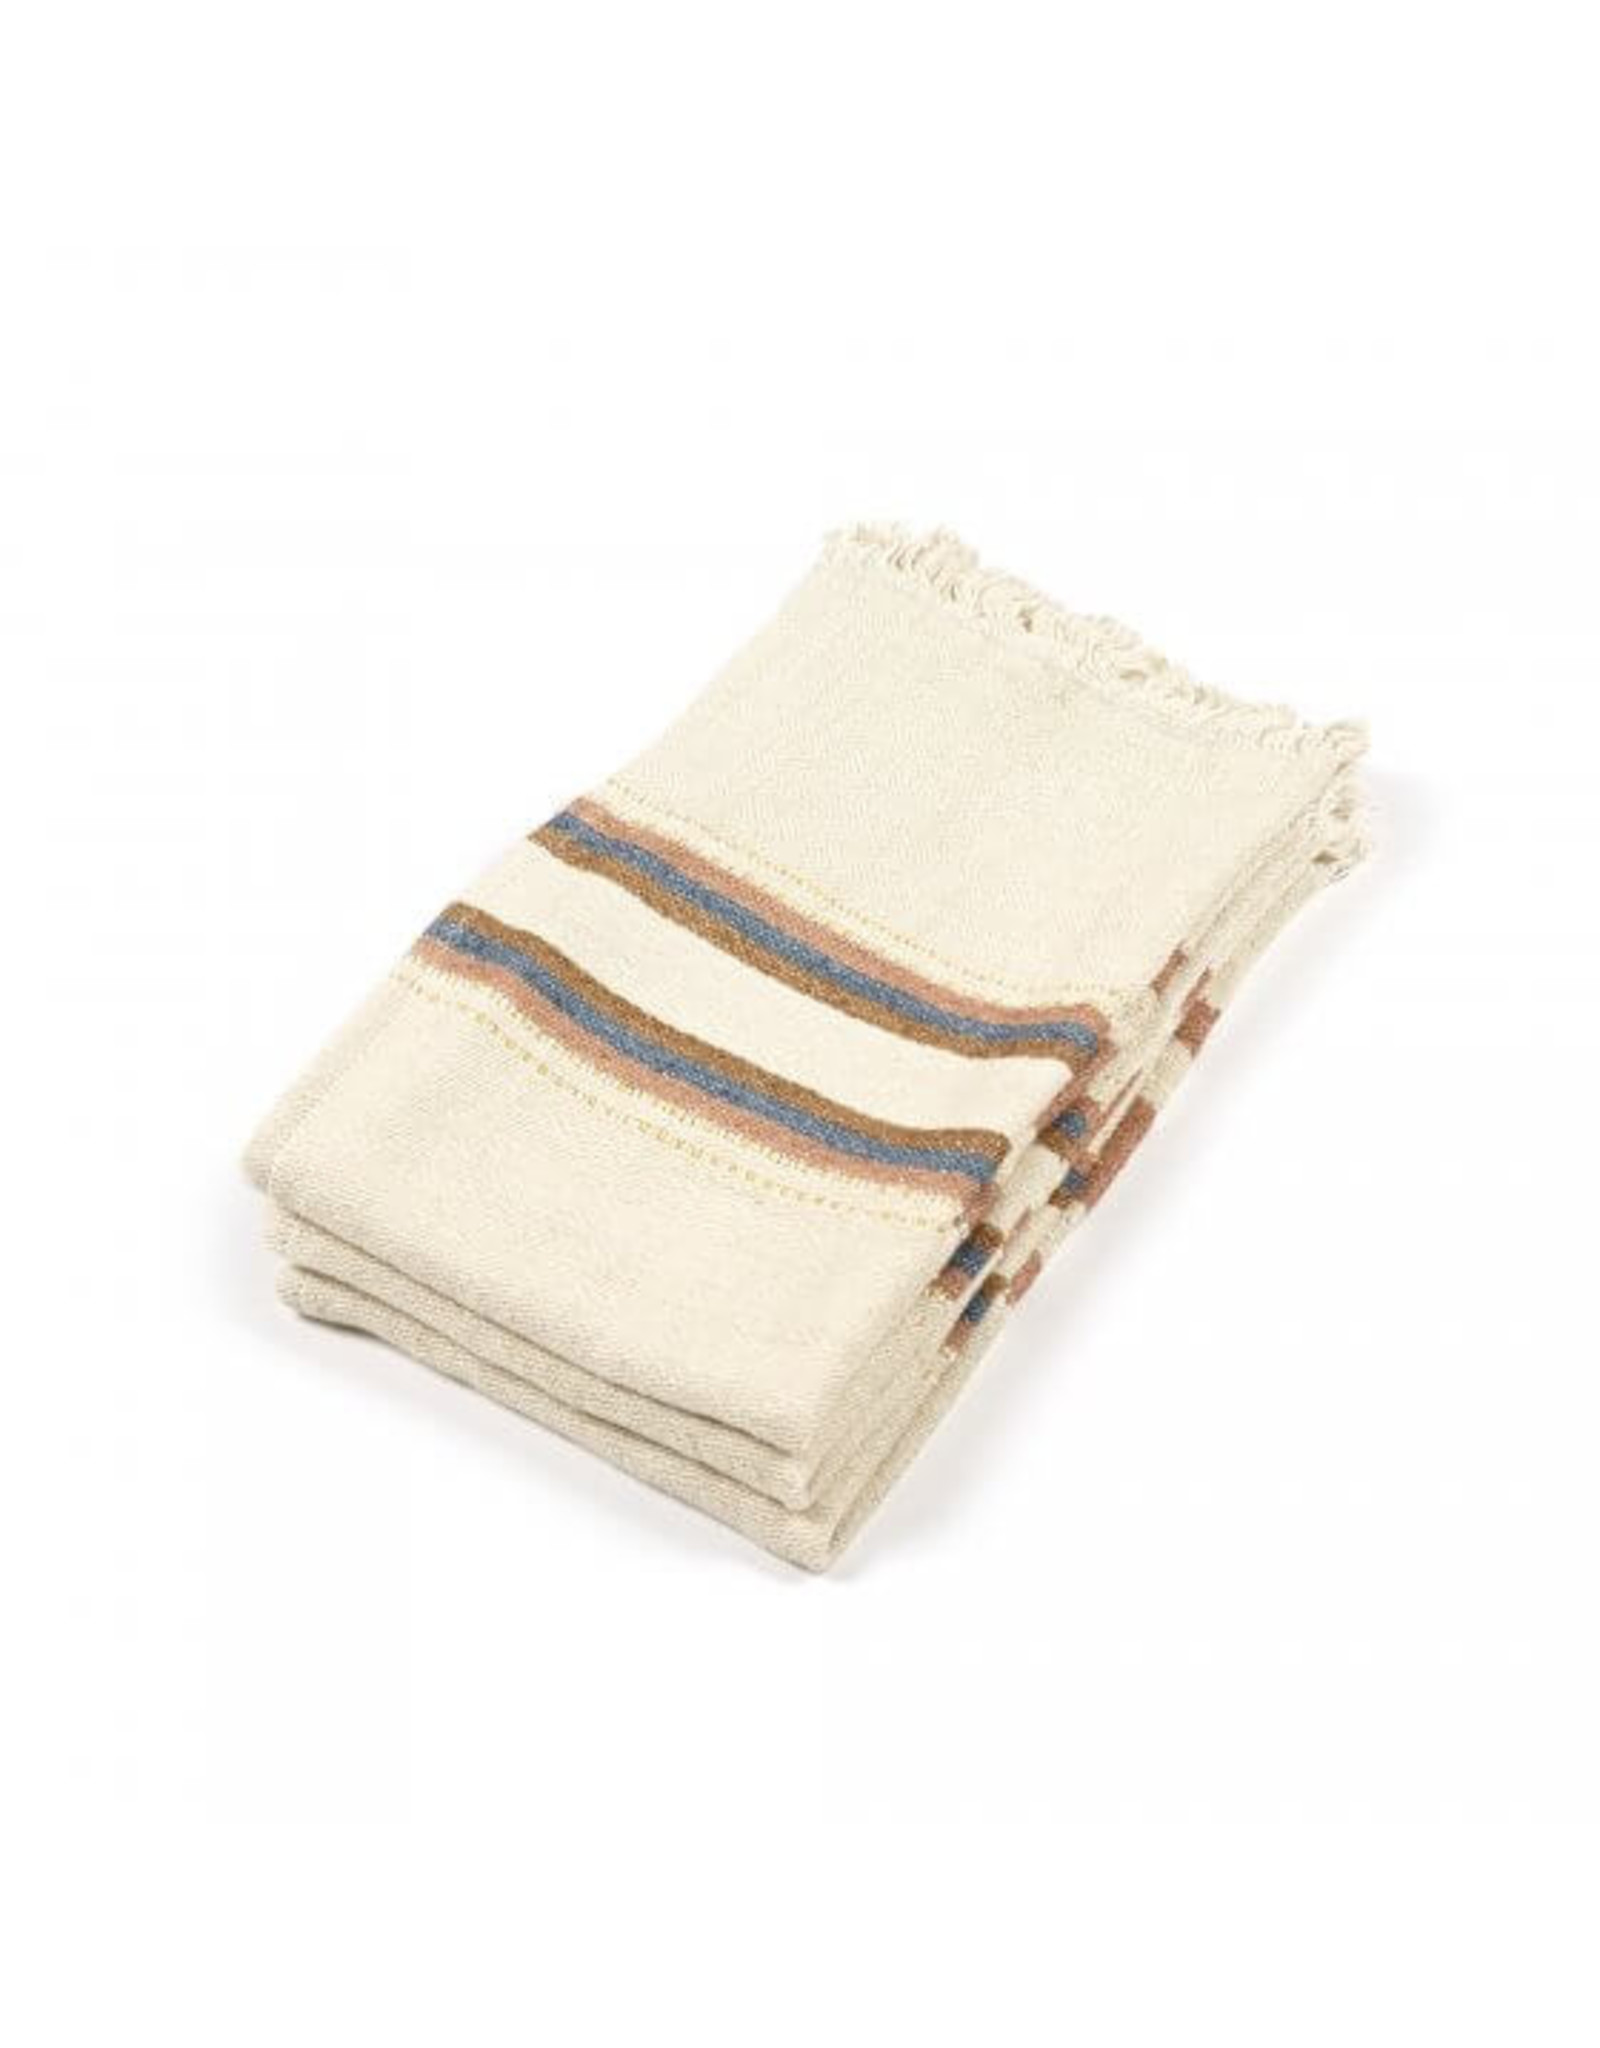 The Belgian Harlan Stripe Guest Towel 21.5 x 25.5